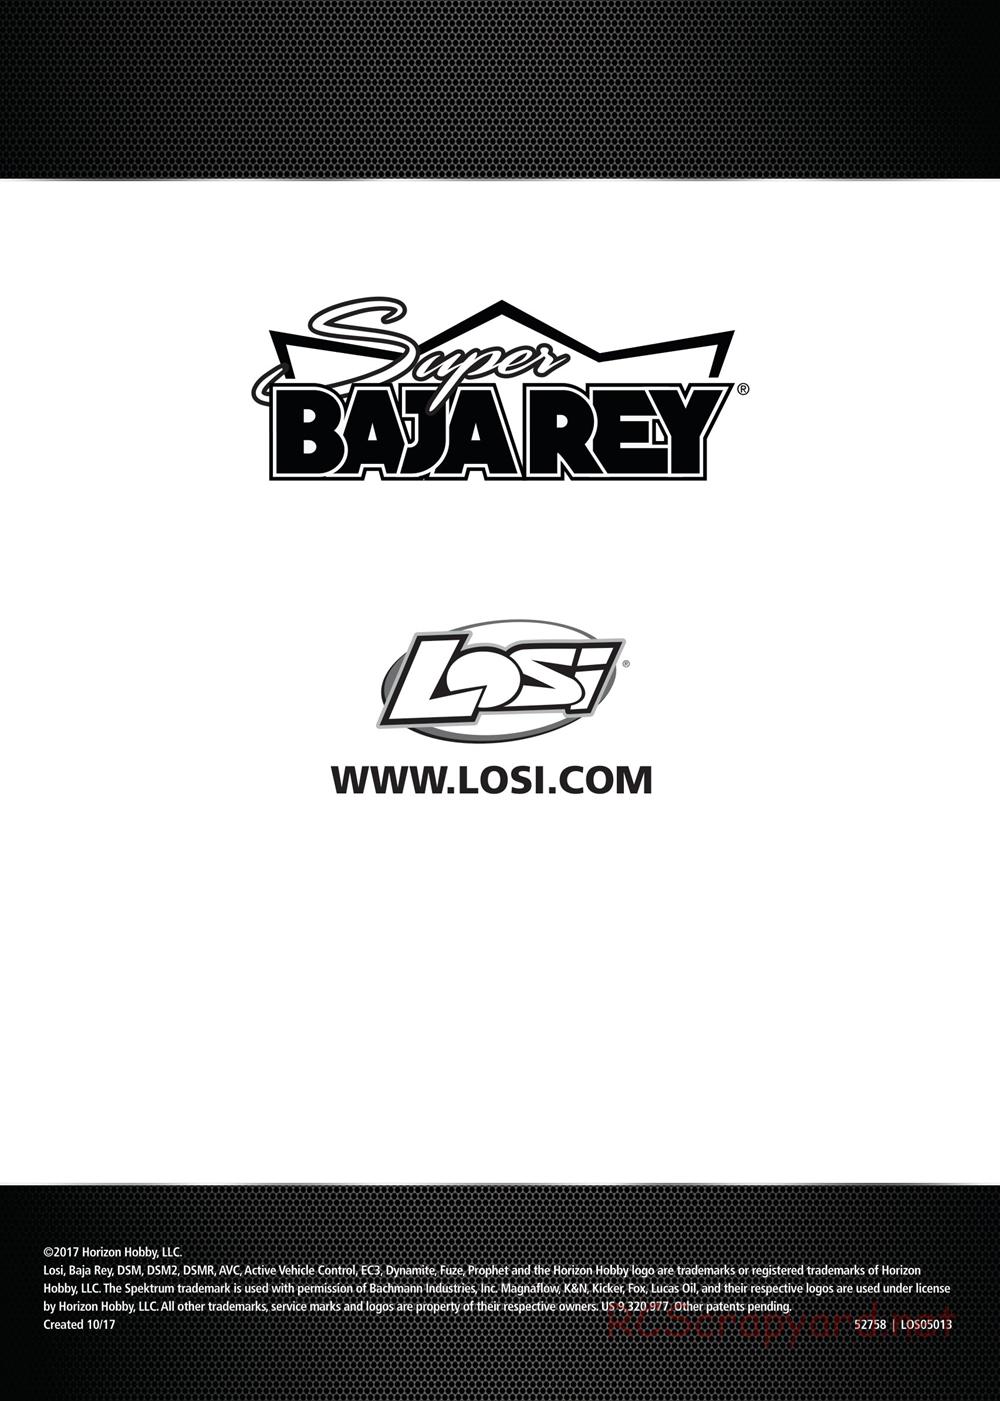 Team Losi - Super Baja Rey - Manual - Page 18